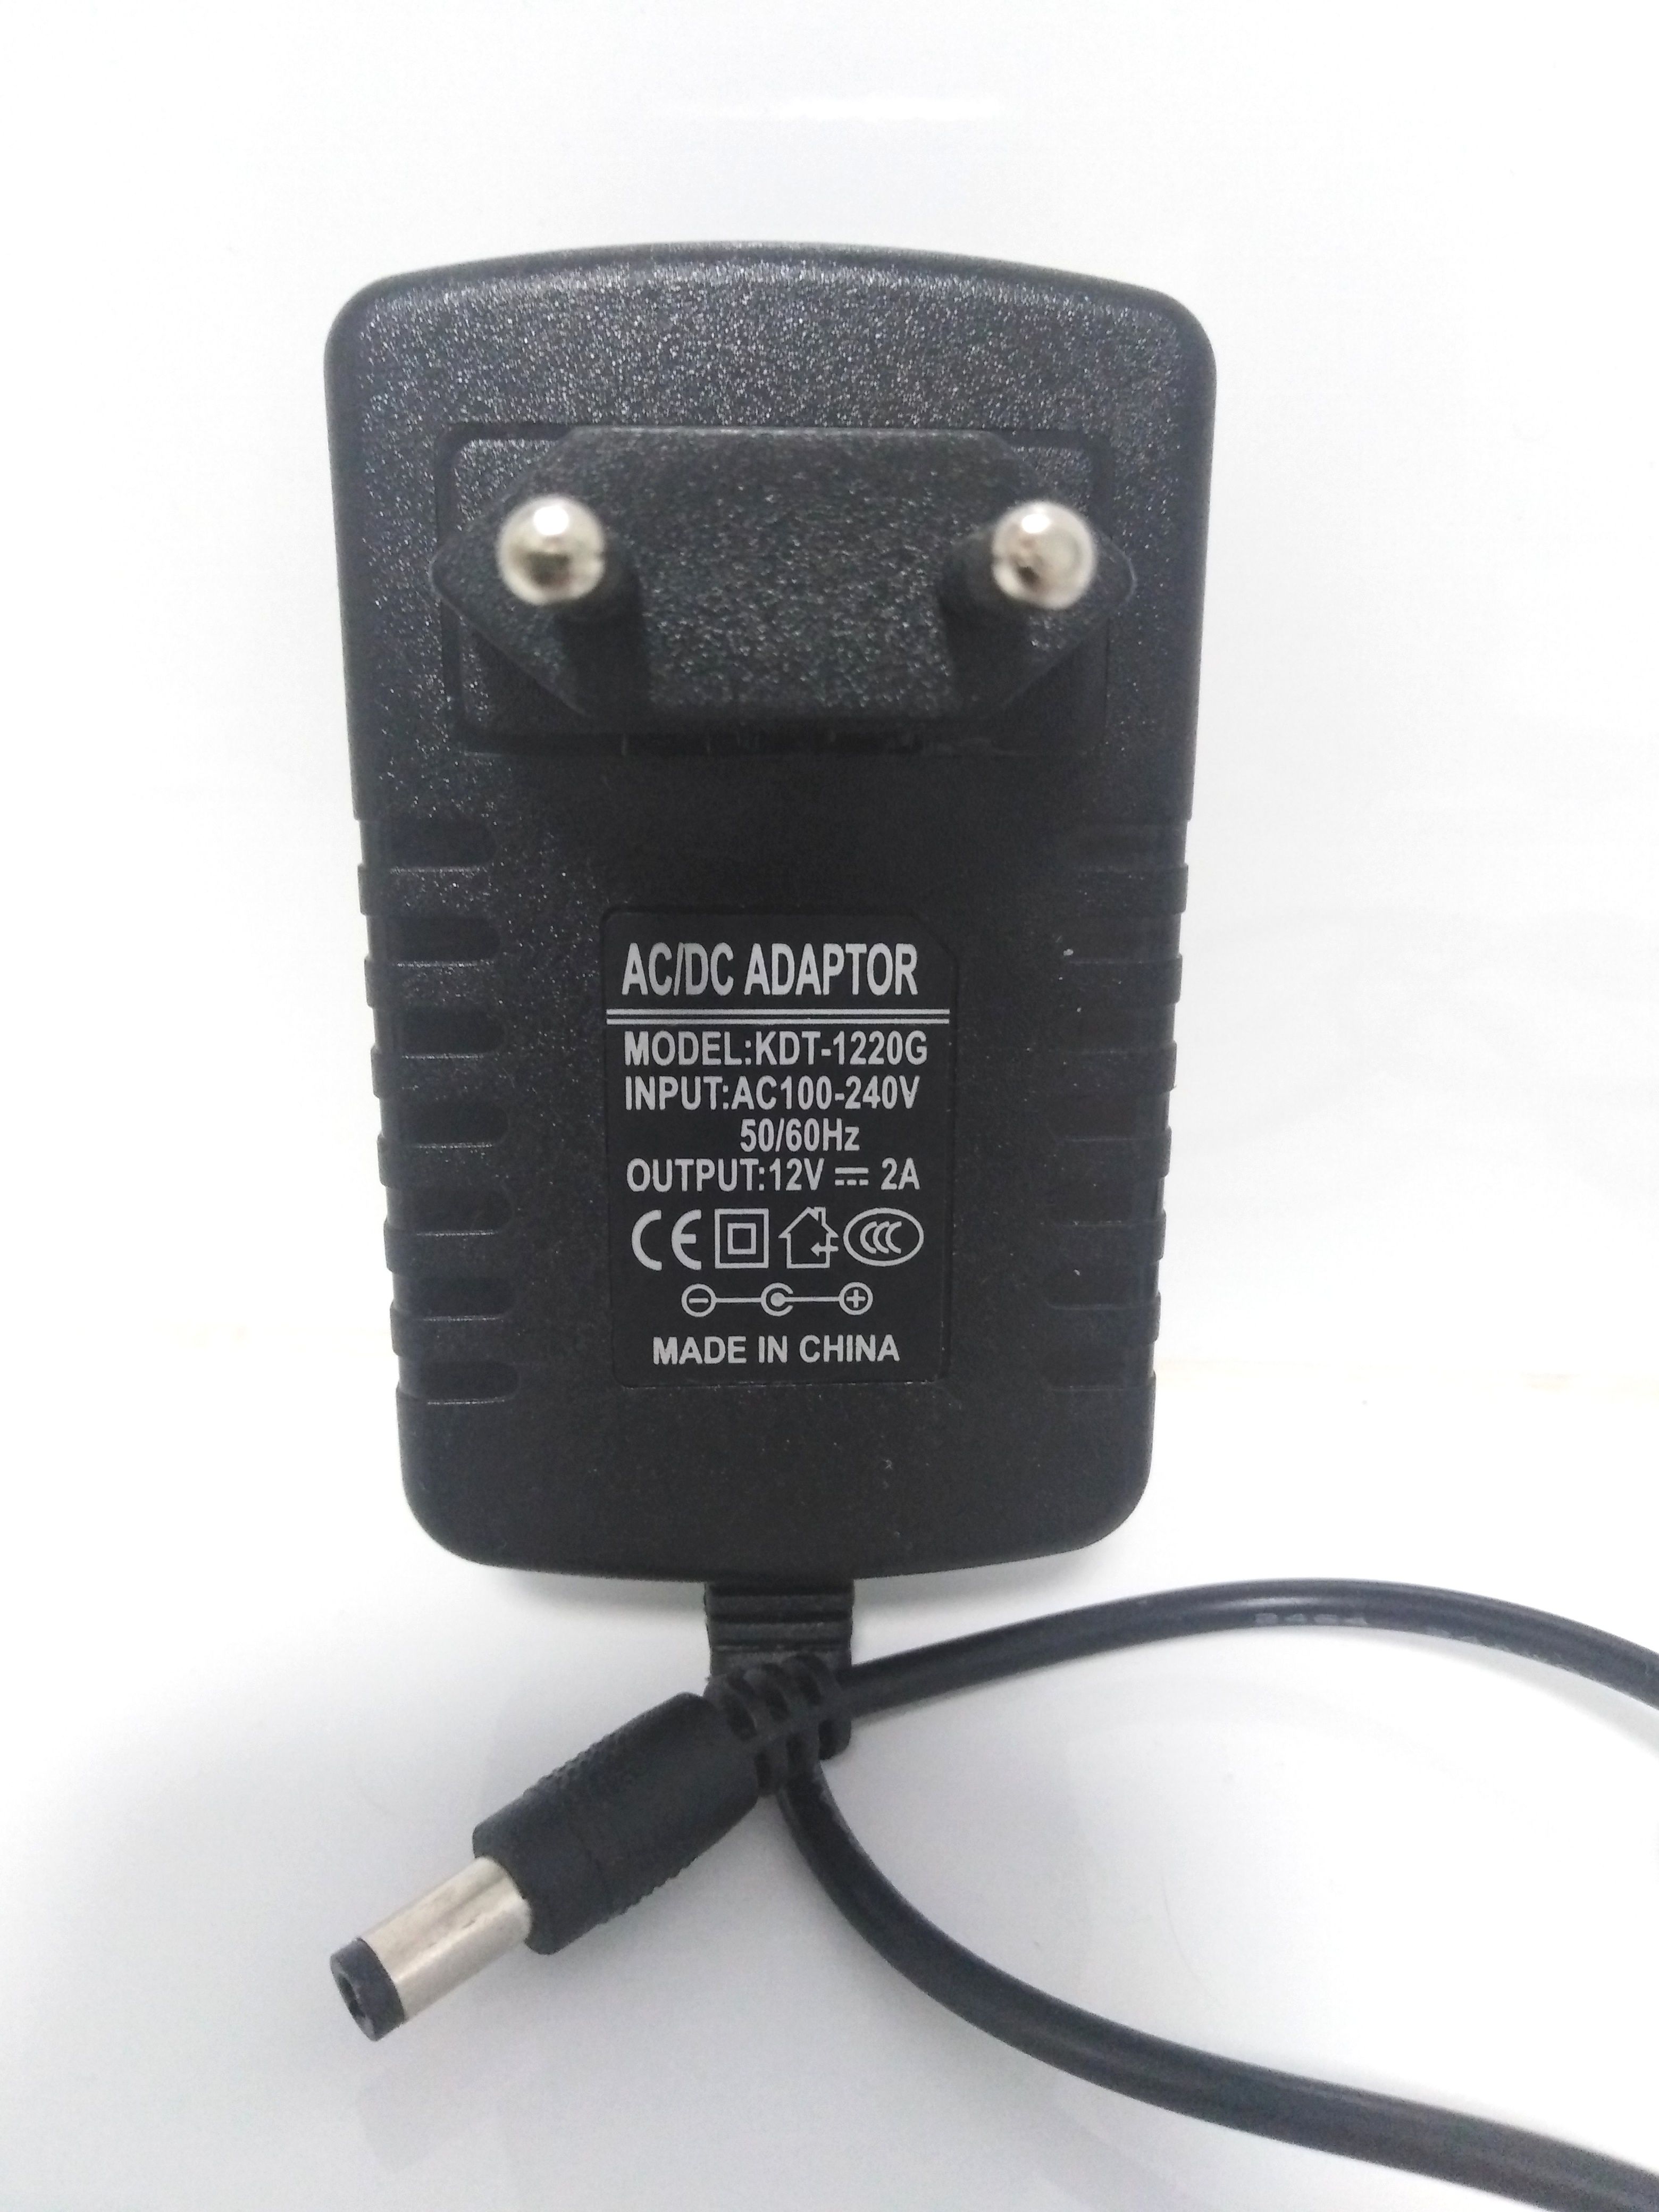 Ac dc adapter 12v. Адаптер AC DC 12v. AC DC адаптер модель 1220. LX-1220 AC/DC Adaptor 12v. AC/DC Adaptor model SF-2420.